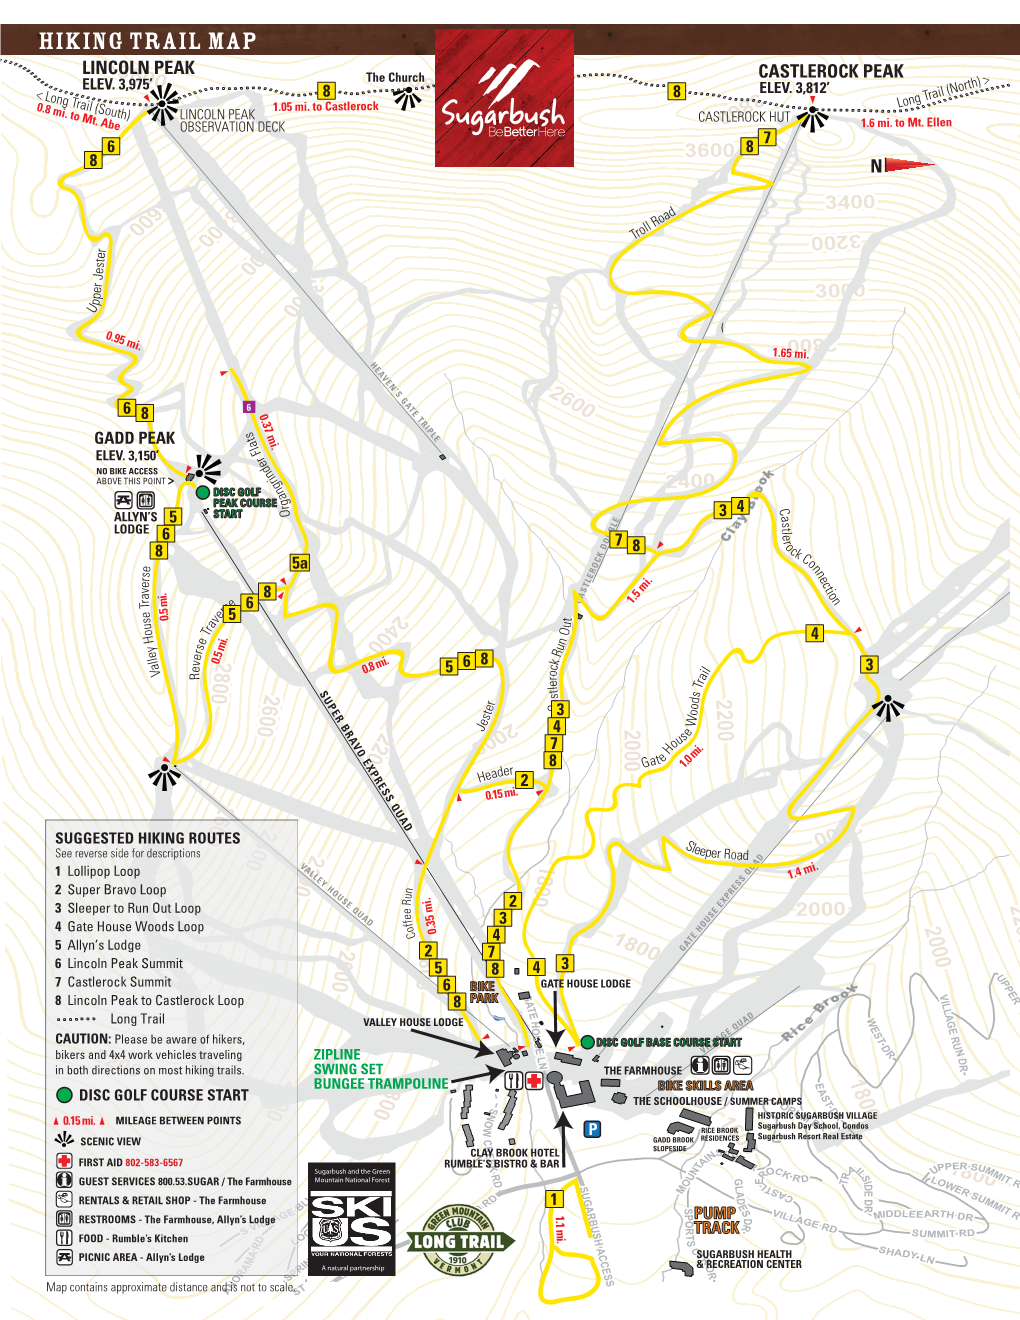 Hiking Trail MAP LINCOLN PEAK CASTLEROCK PEAK ELEV